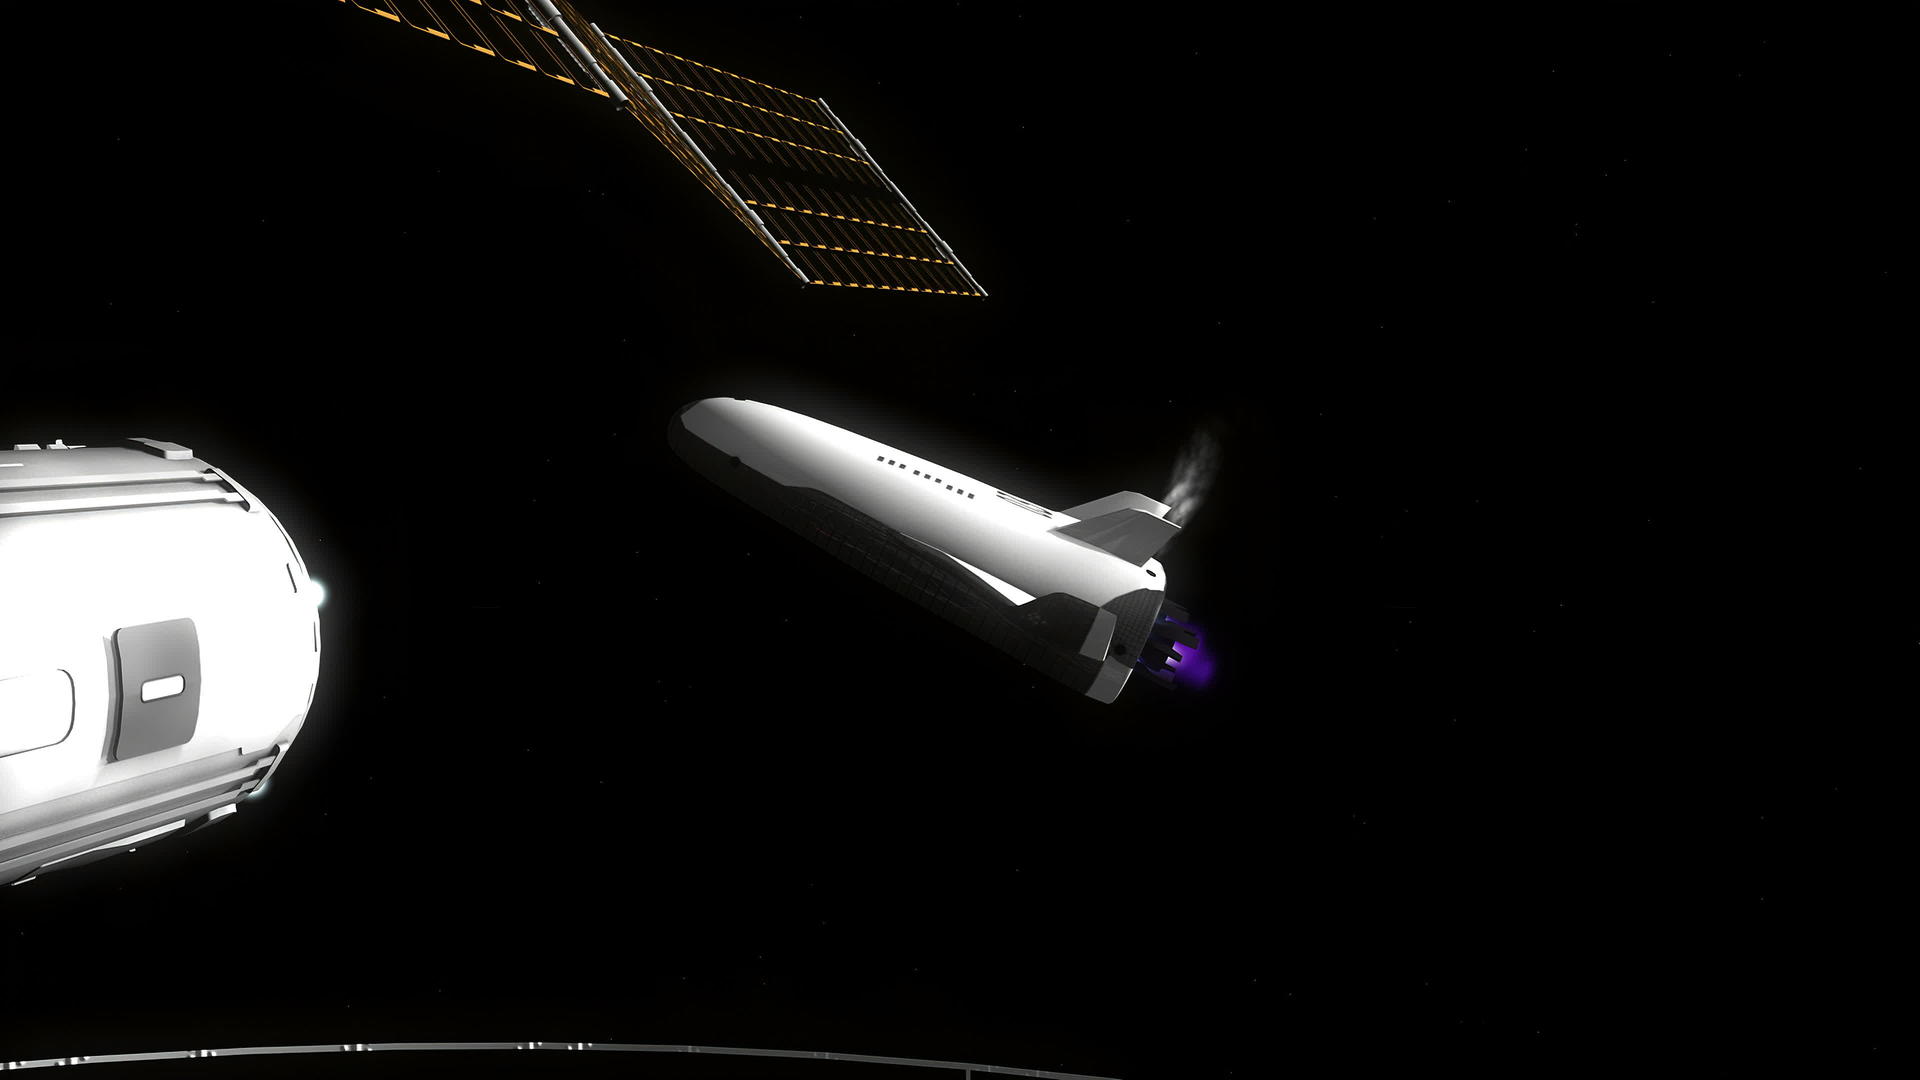 Scifi太空船在空间站对接视频的预览图